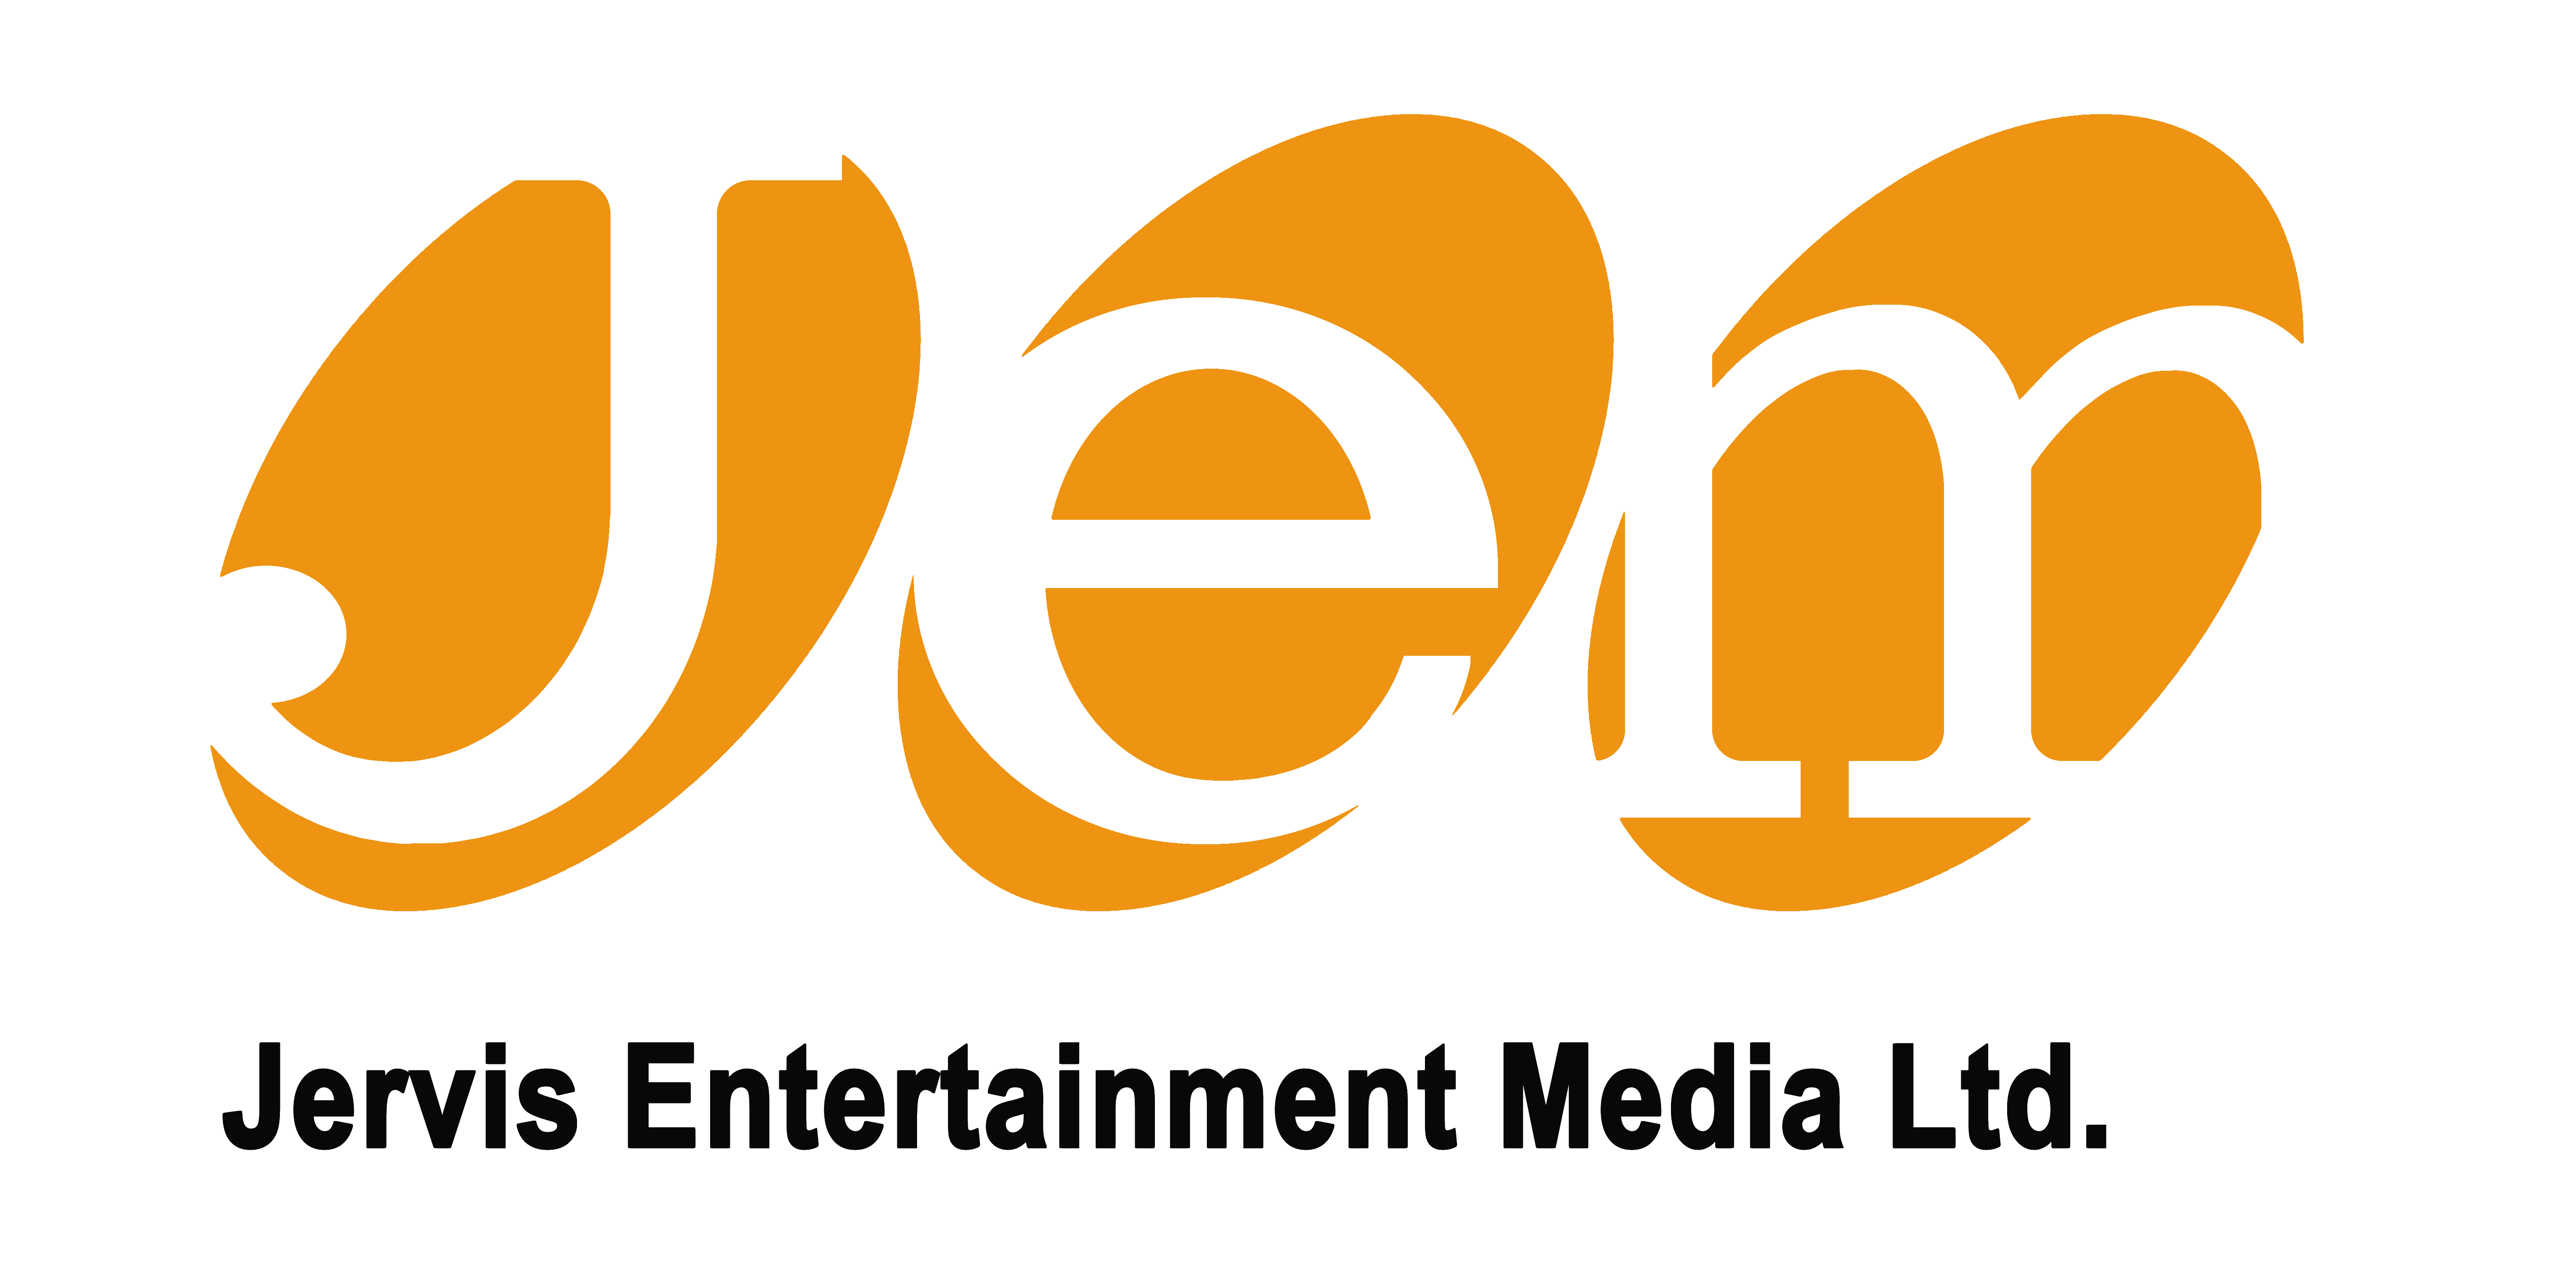 Jervis Entertainment Media